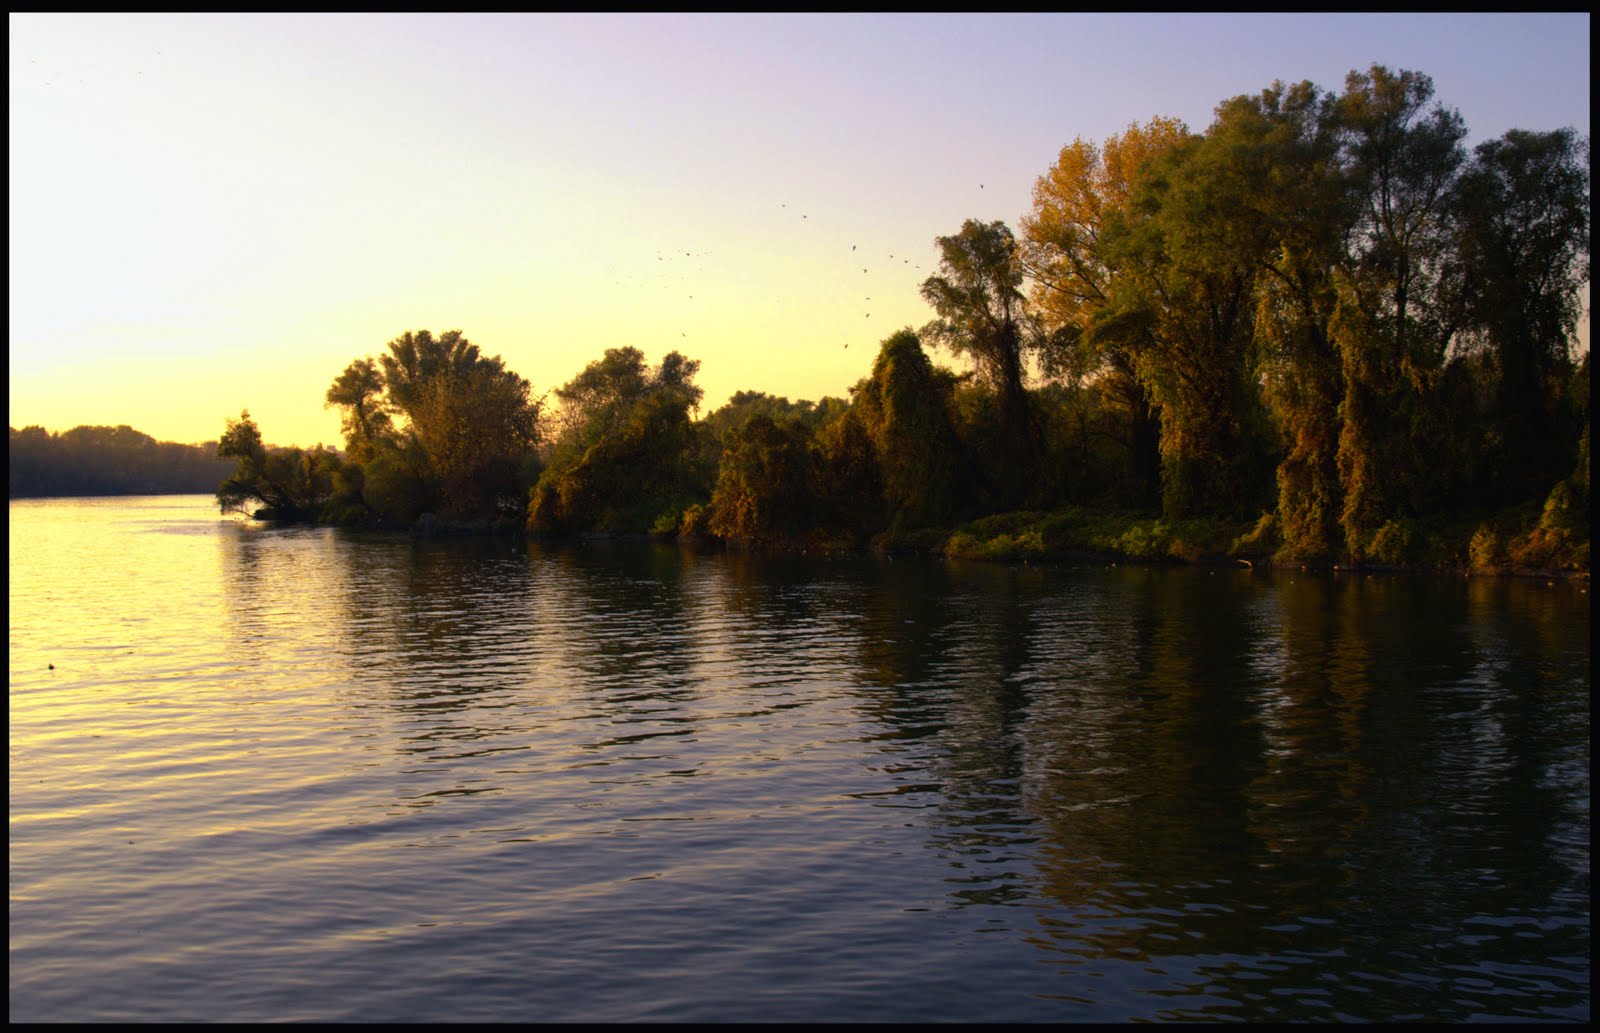 Danube river bank